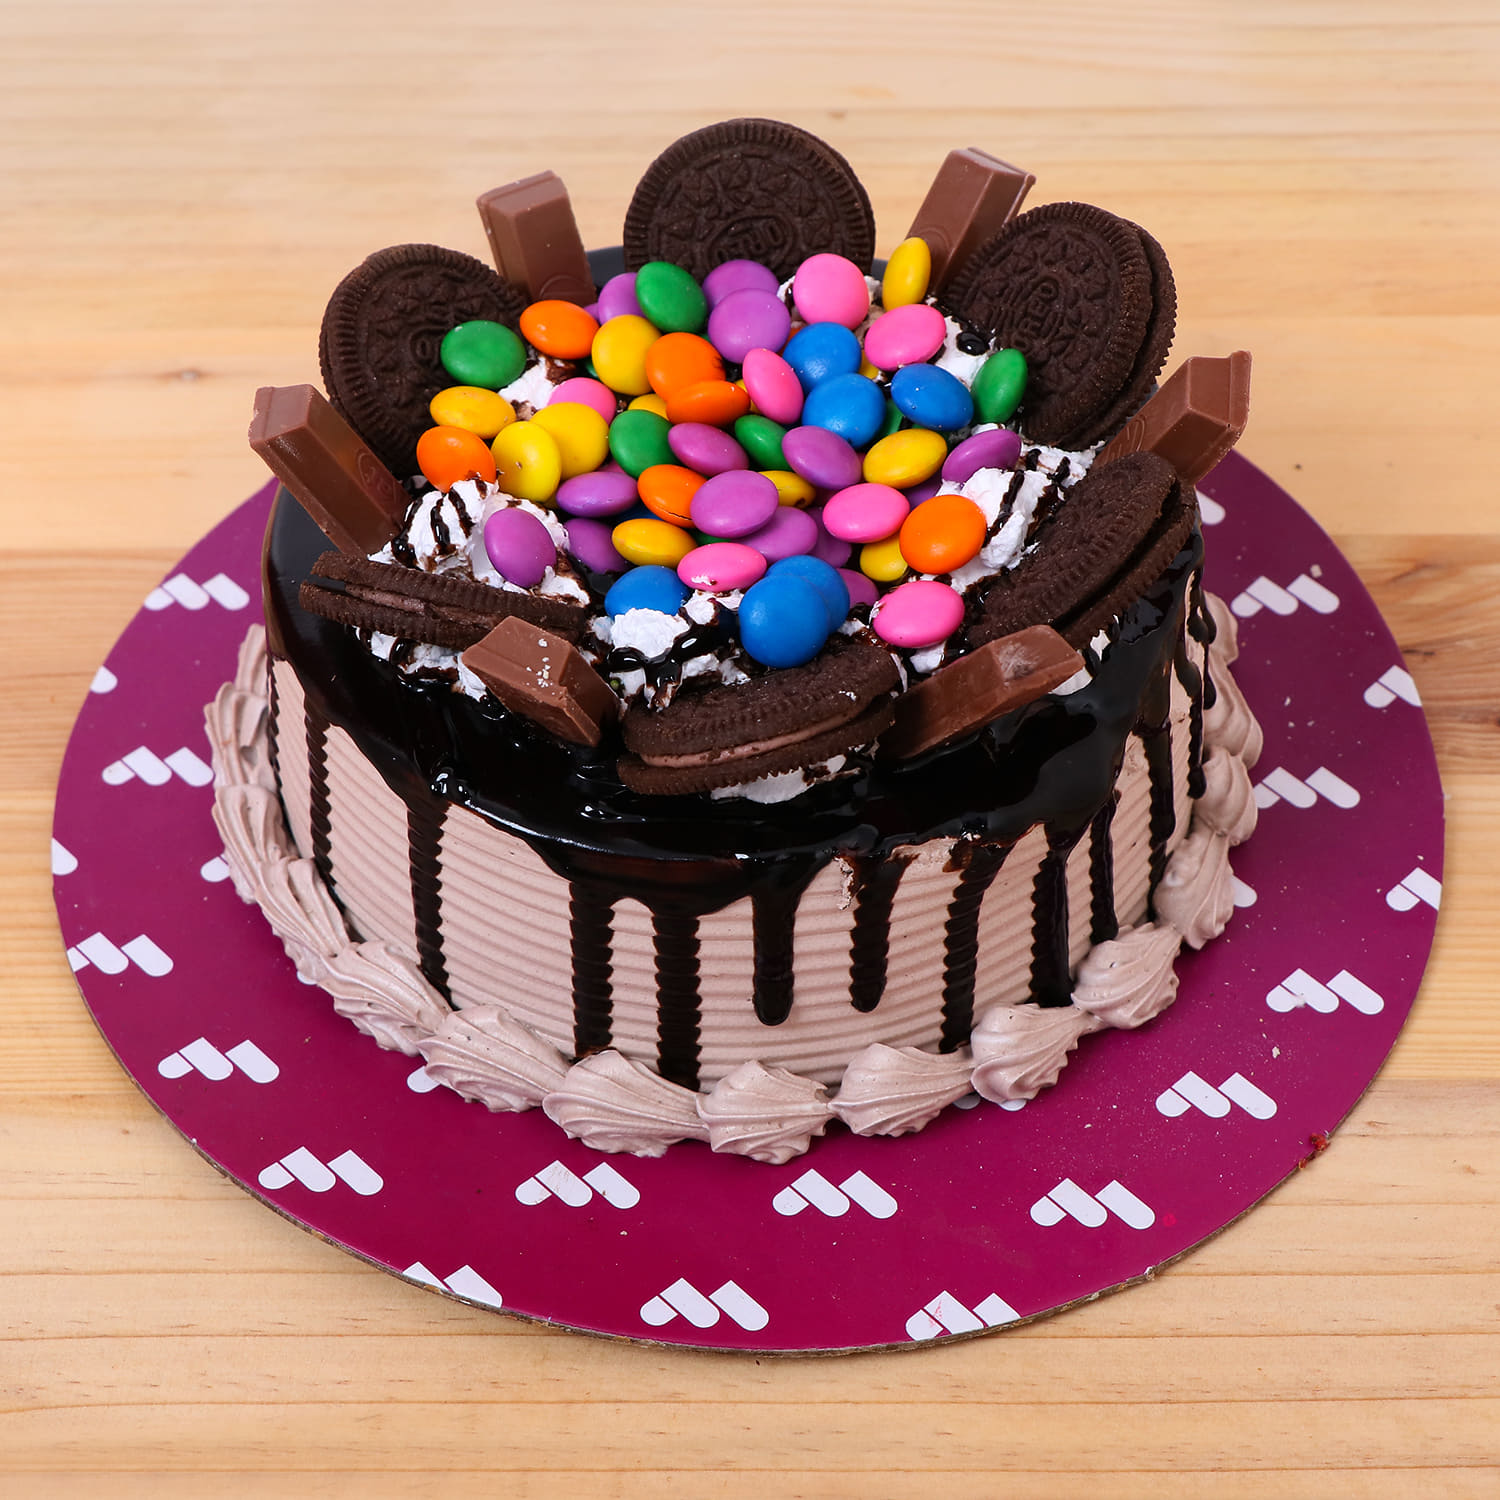 Chocolate Vanilla Gems Cake - Asansol Cake Delivery Shop